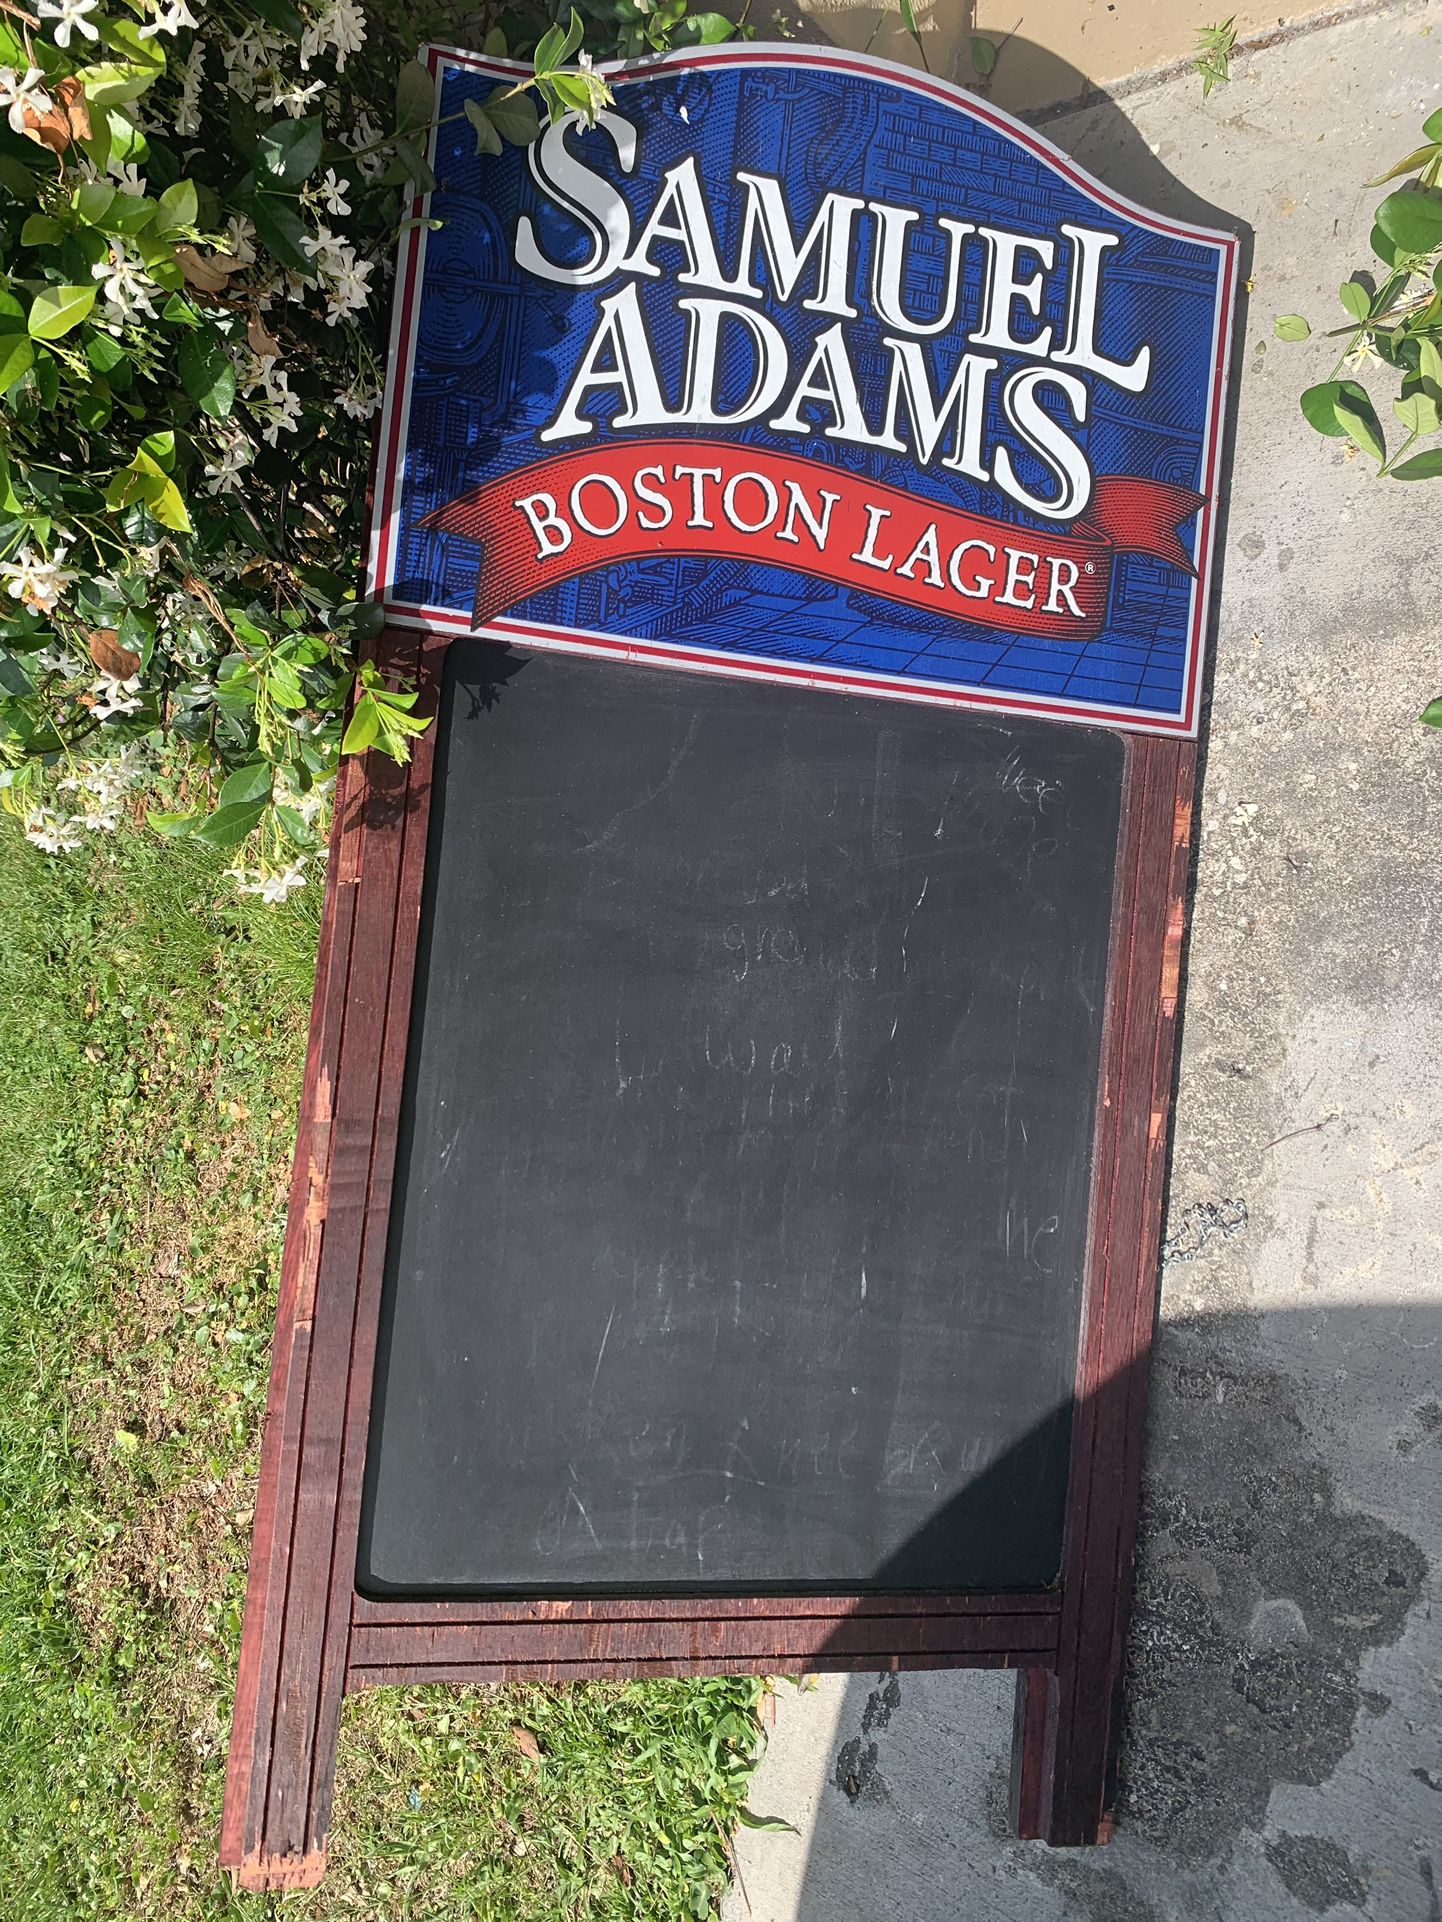  Great for a tiki bar or a bar Adams chalkboard